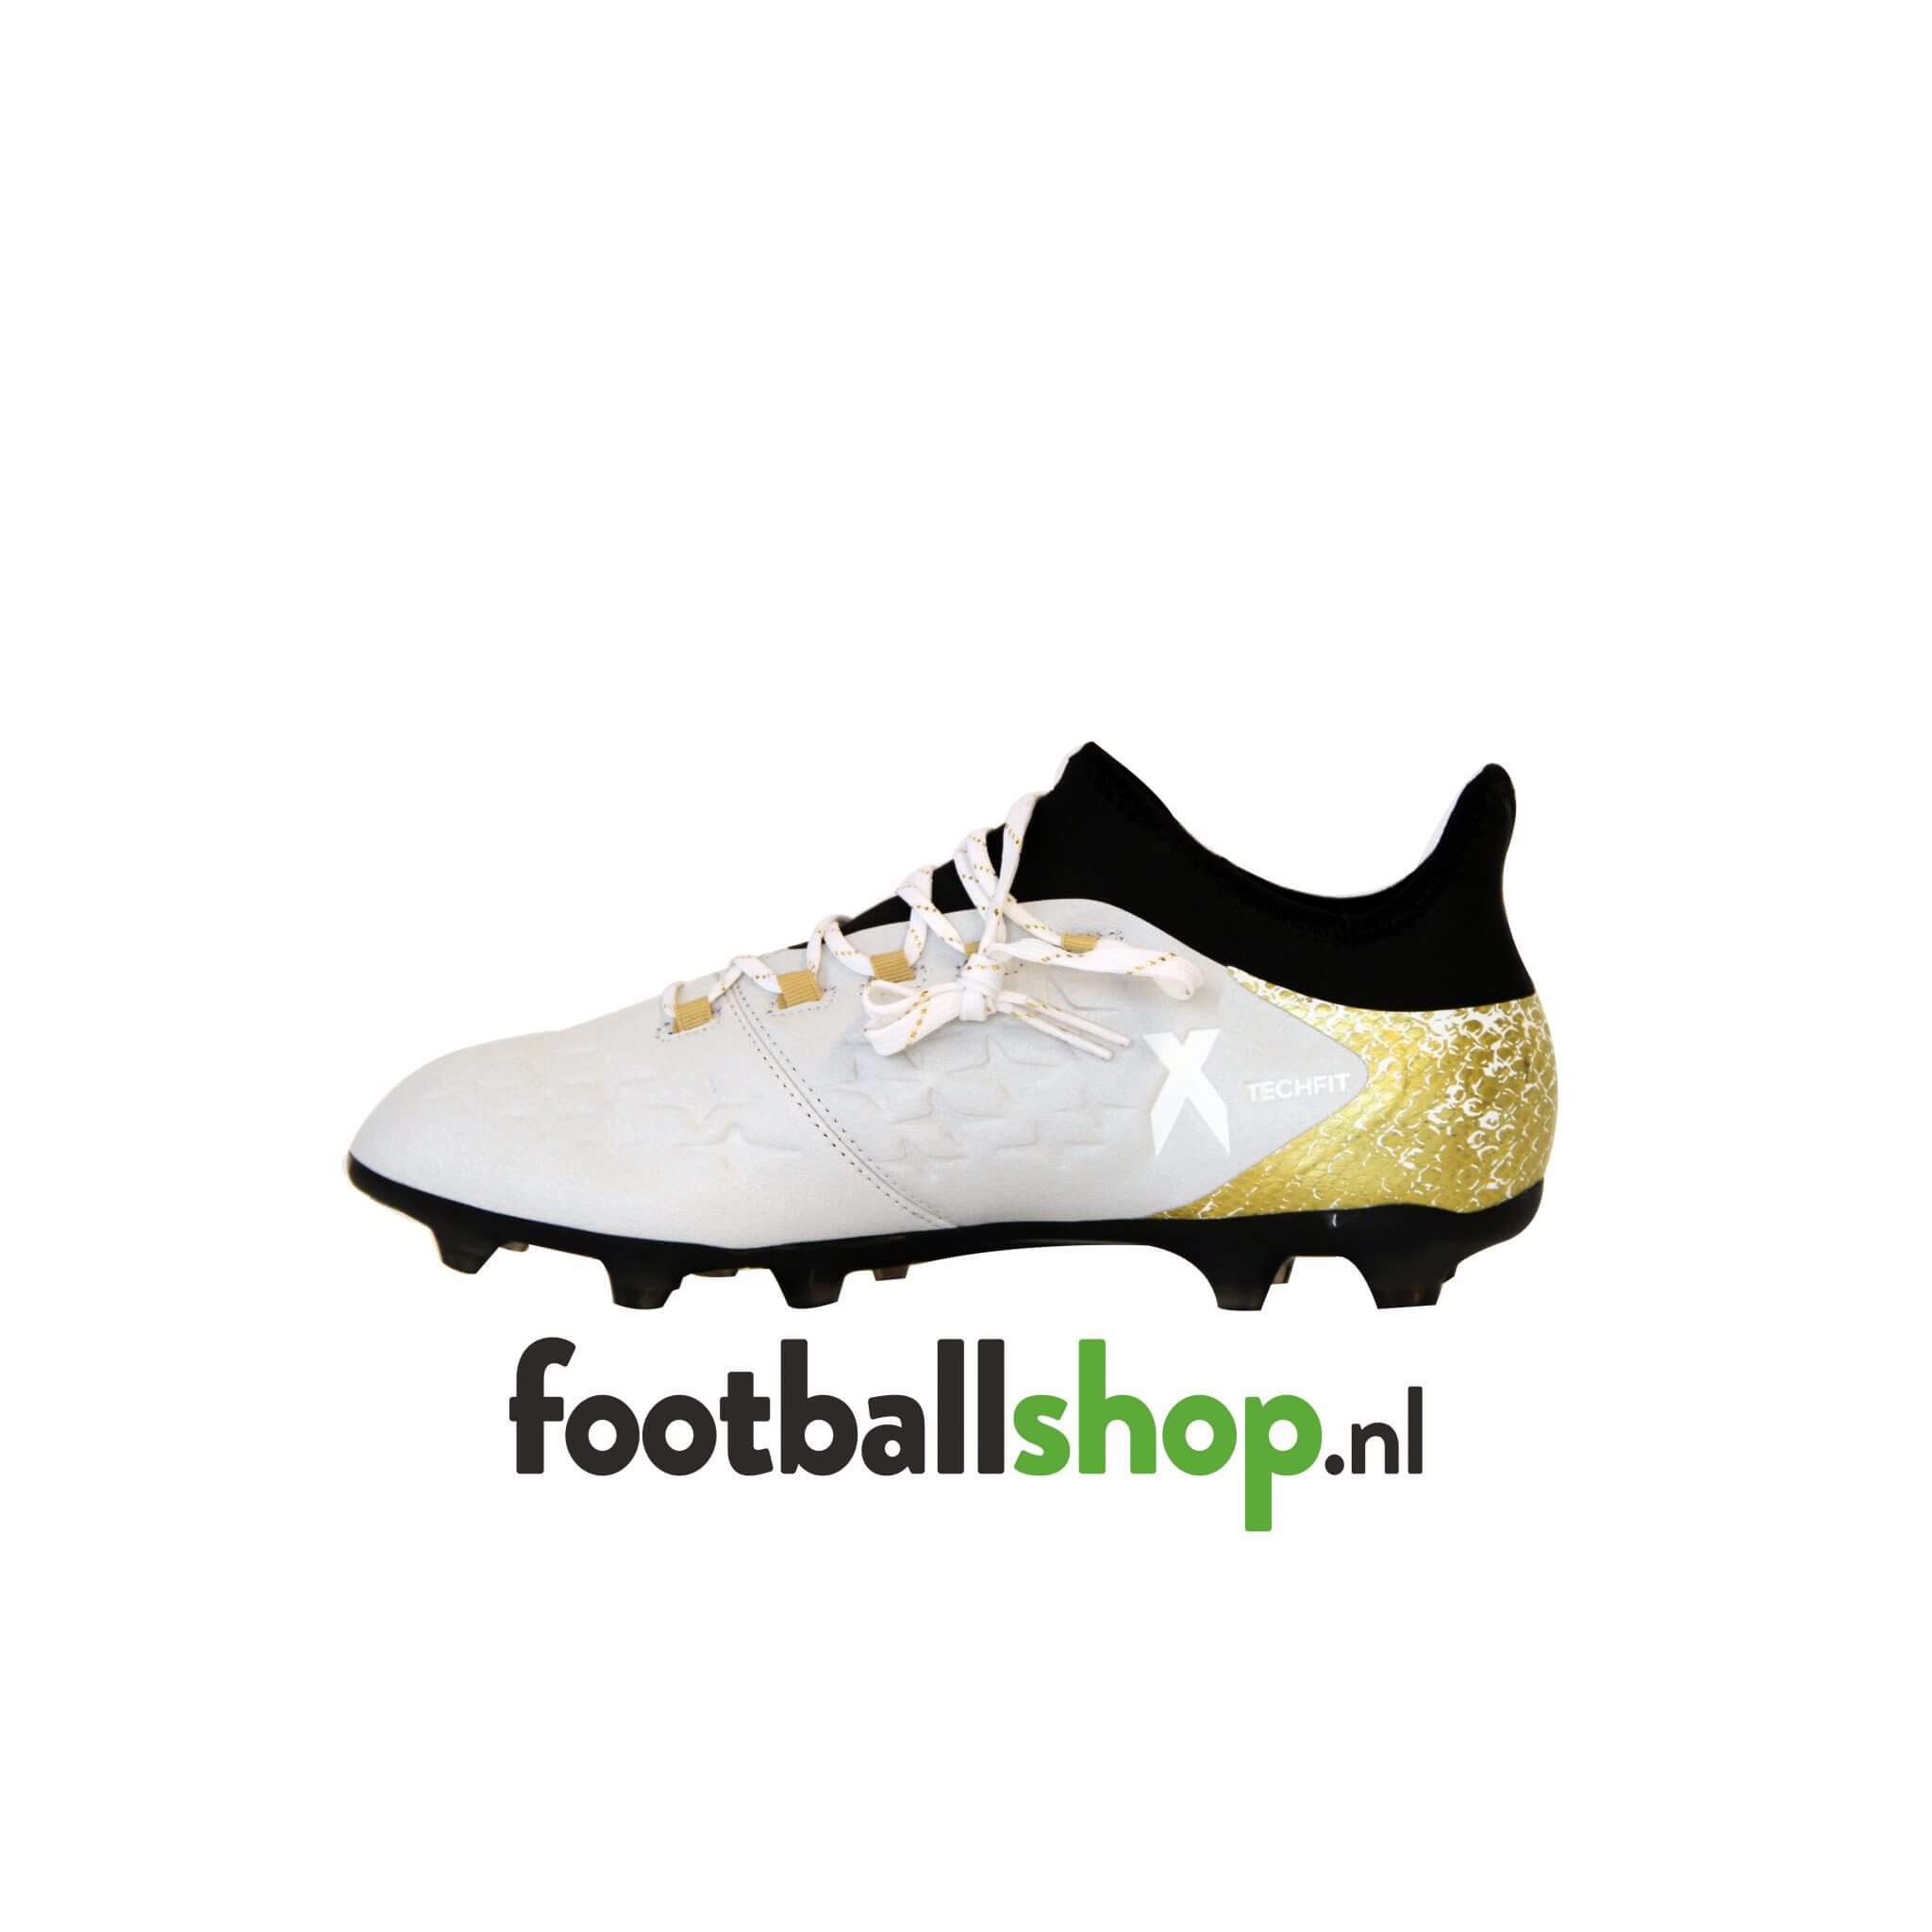 aankomst beginsel Sluiting adidas X 16.2 FG Future White Core Black AQ4308 kopen - Footballshop.nl -  Footballshop.nl